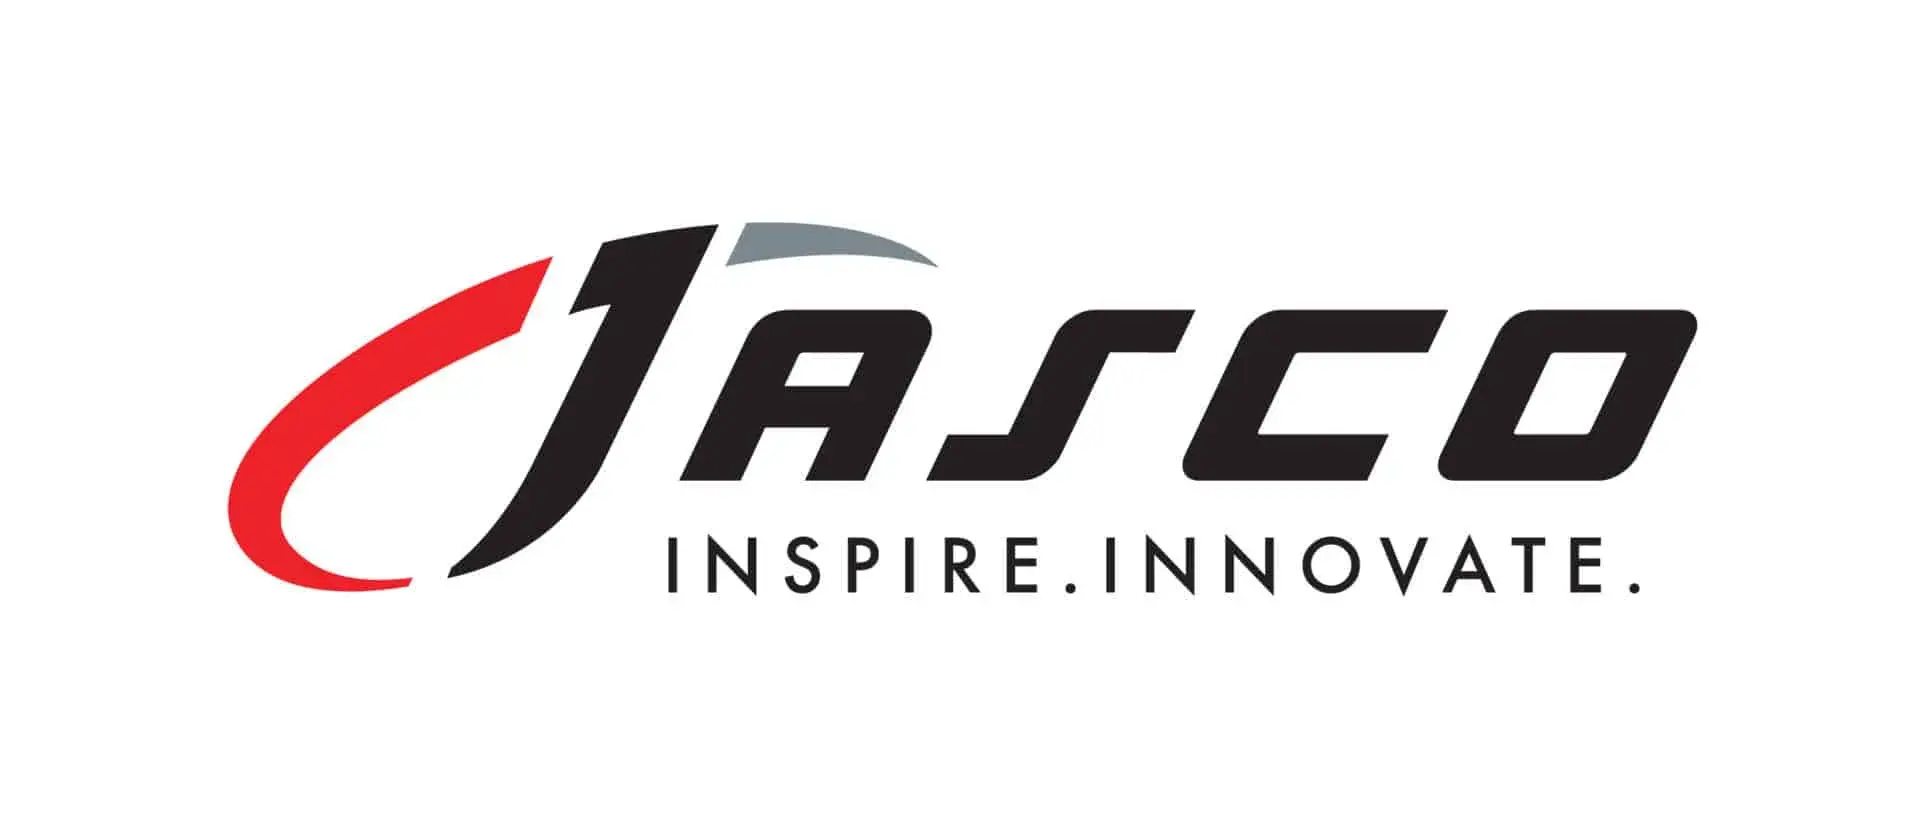 Jasco logo